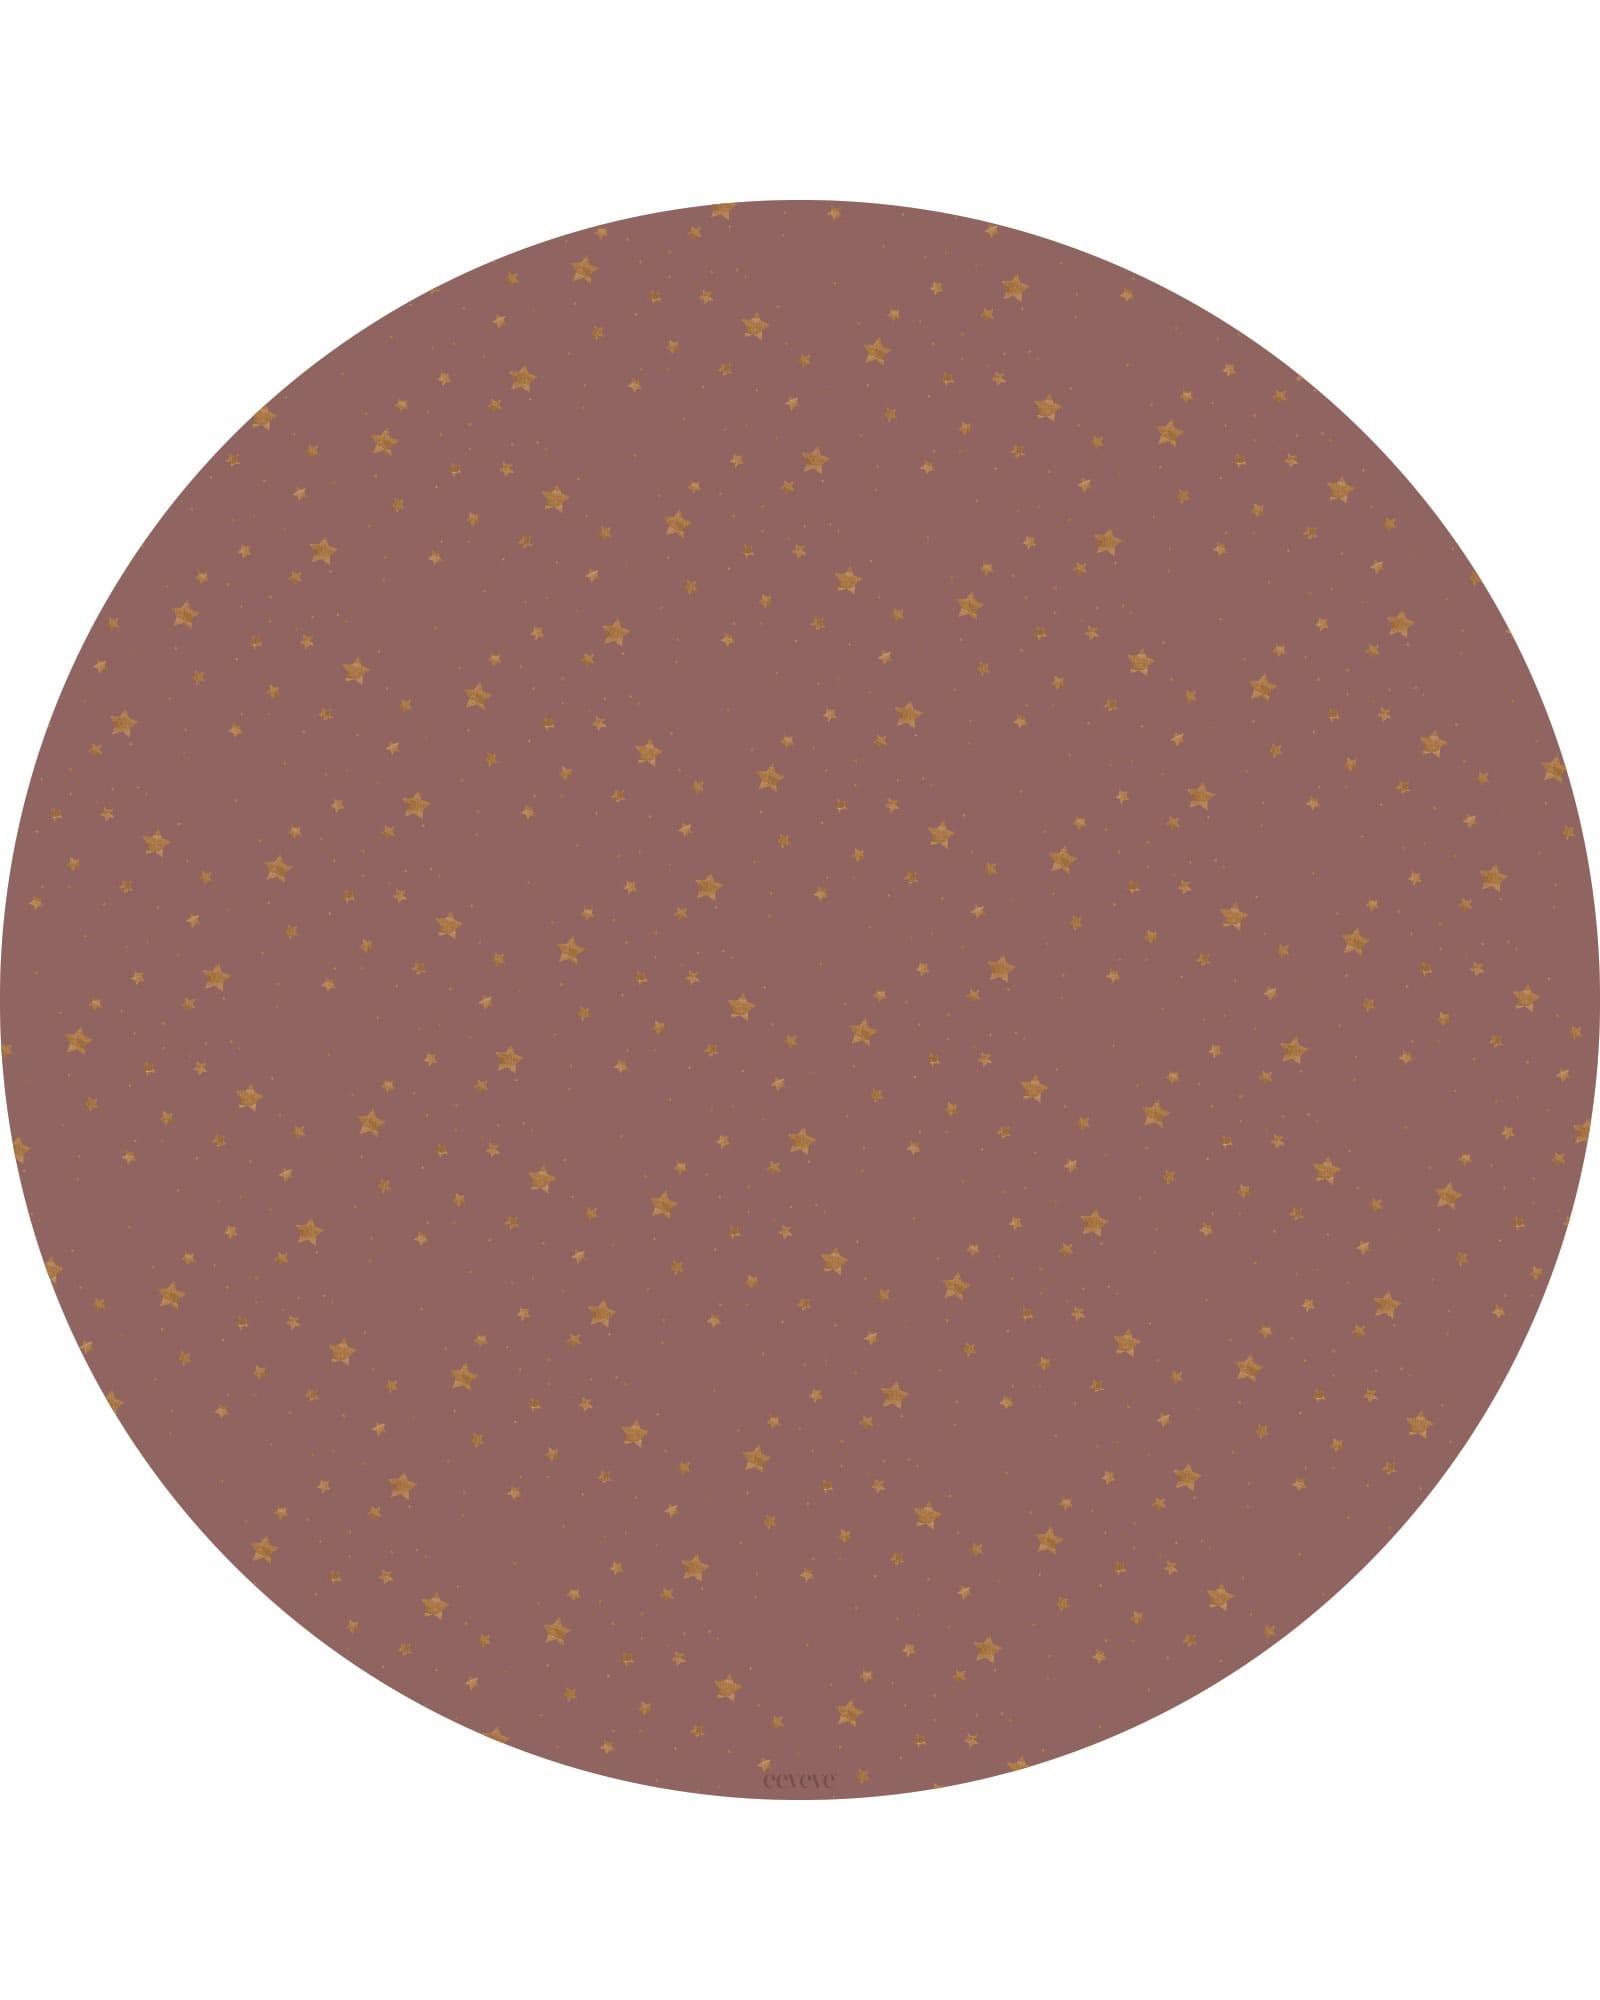 Eeveve - Ronde Vloermat Stars - Copper Rose